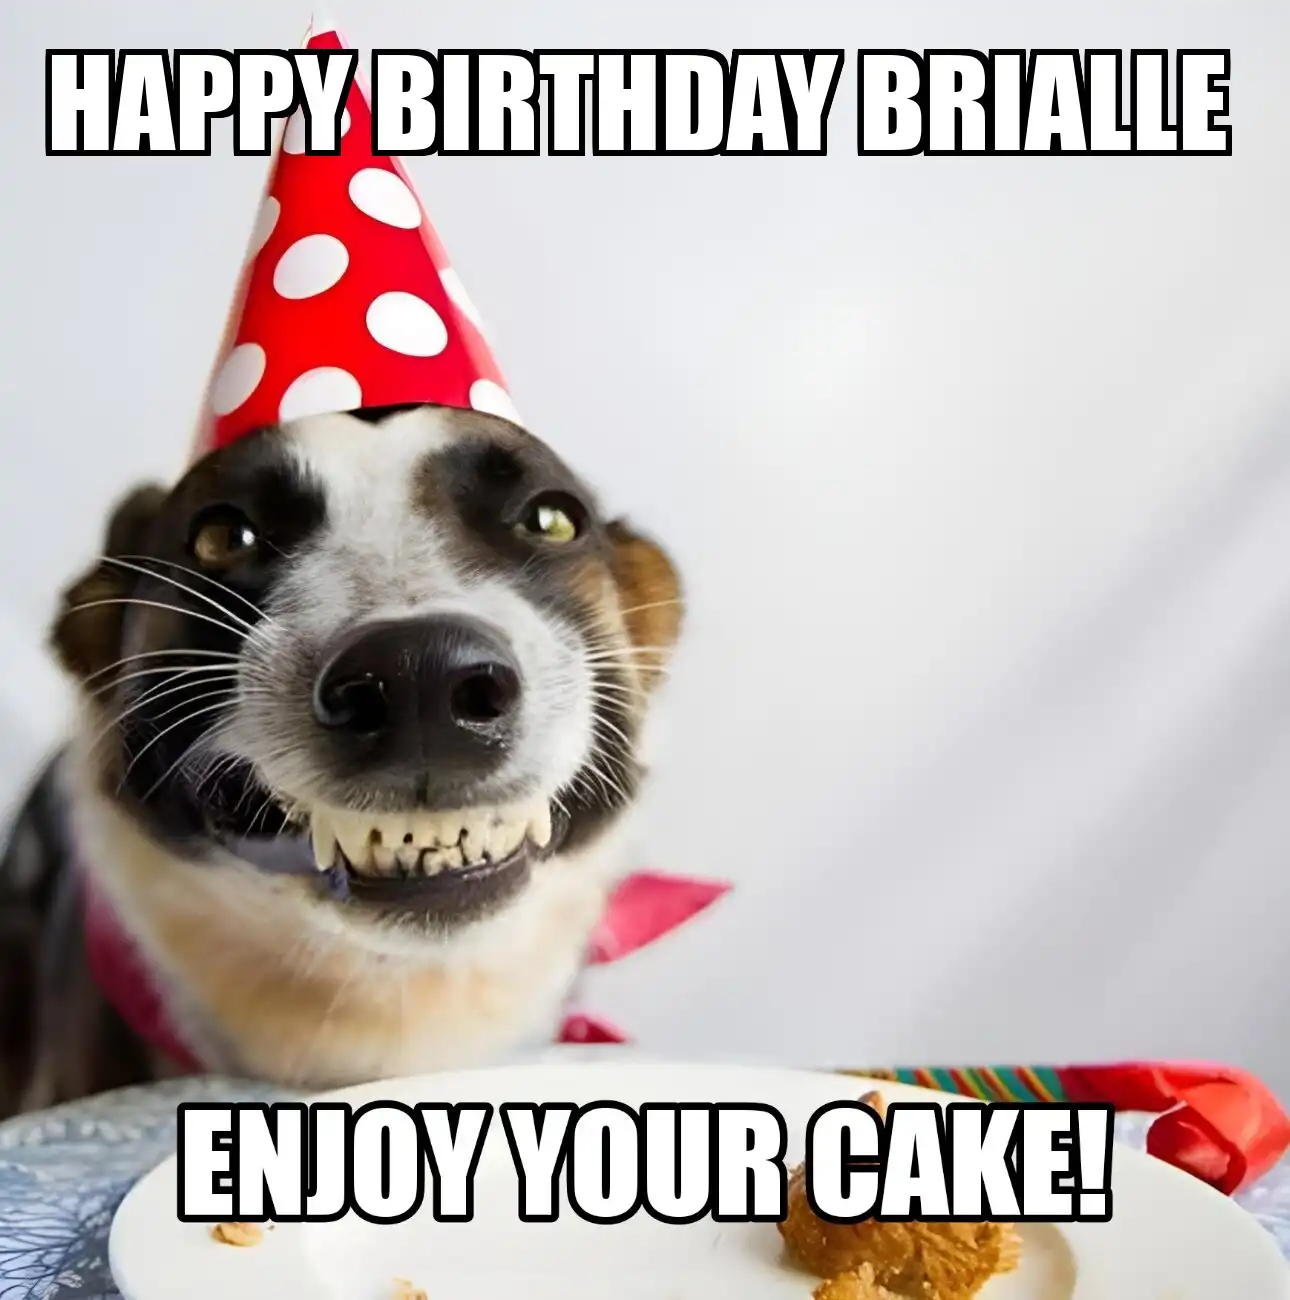 Happy Birthday Brialle Enjoy Your Cake Dog Meme